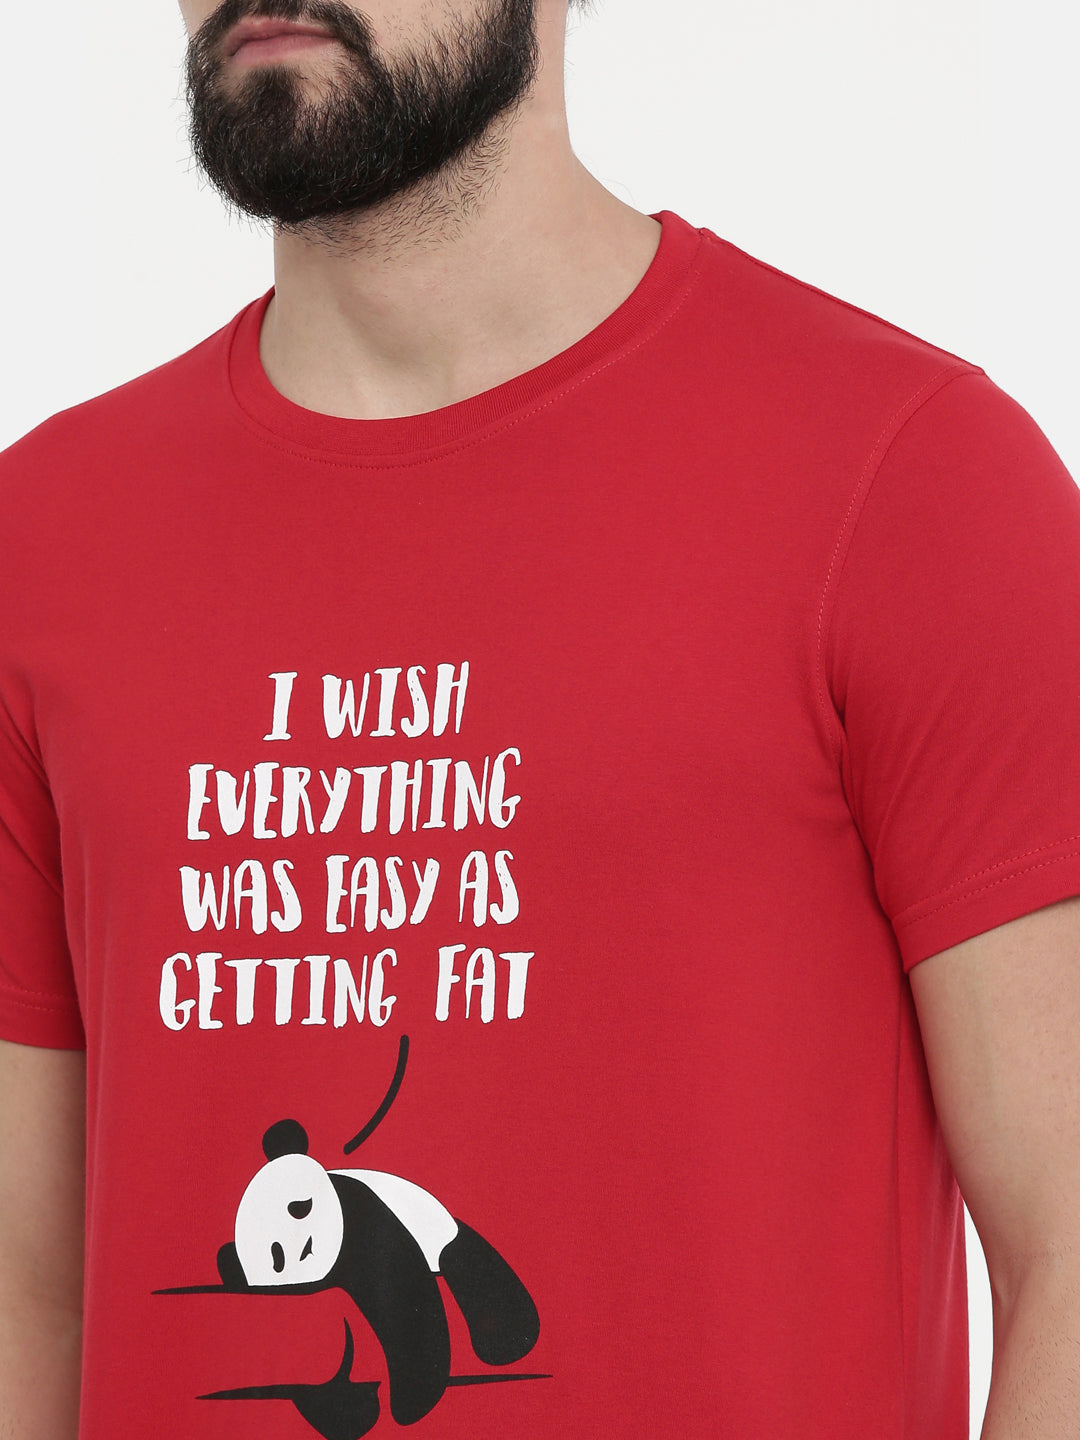 Getting Fat T-Shirt Graphic T-Shirts Bushirt   